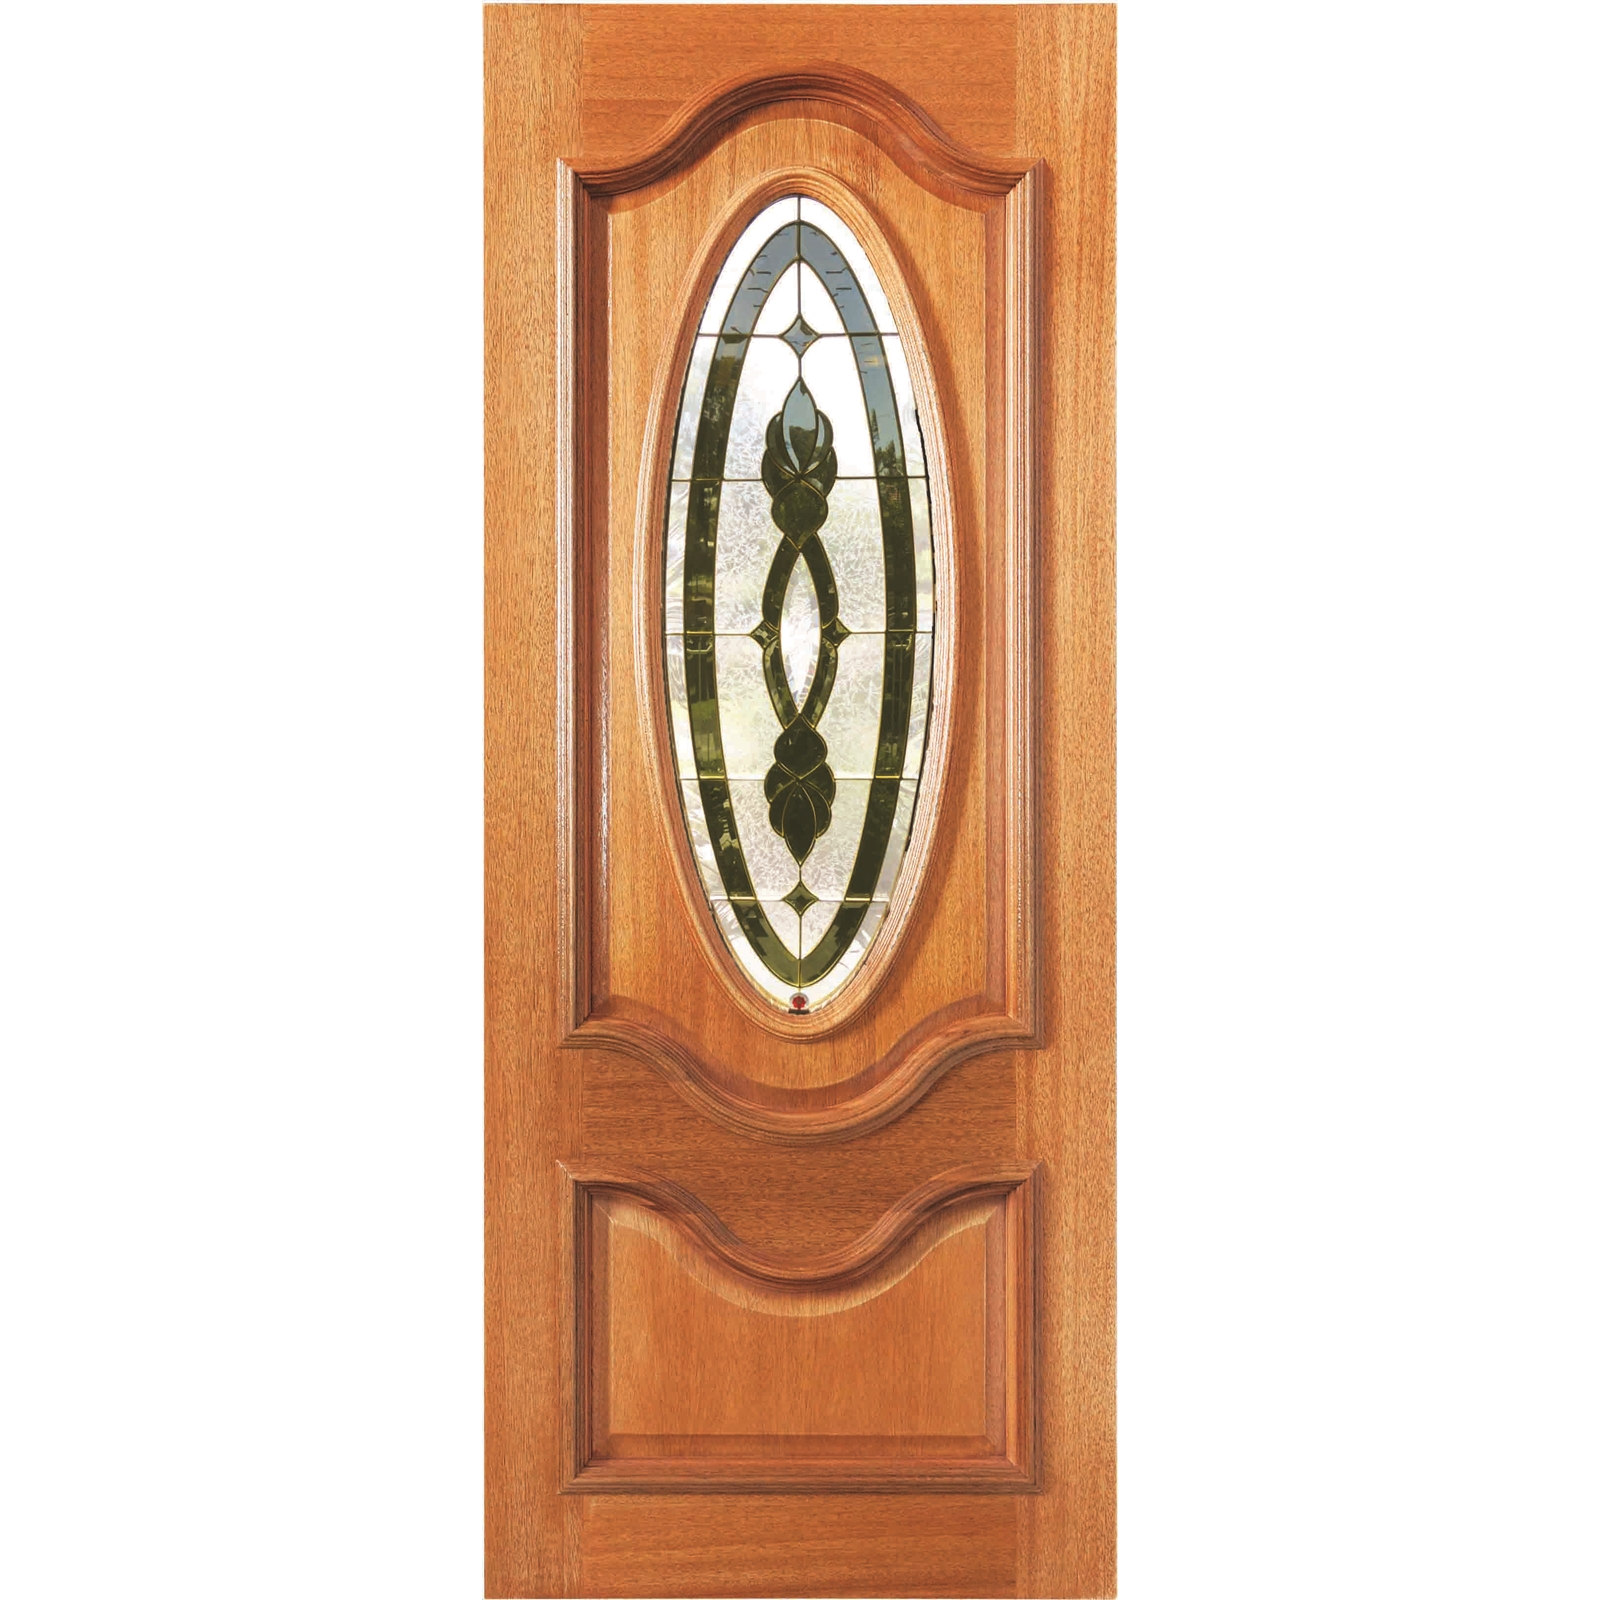 Woodcraft Doors 2040 x 820 x 40mm Olivia Entrance Door With Triple Glazed Glass